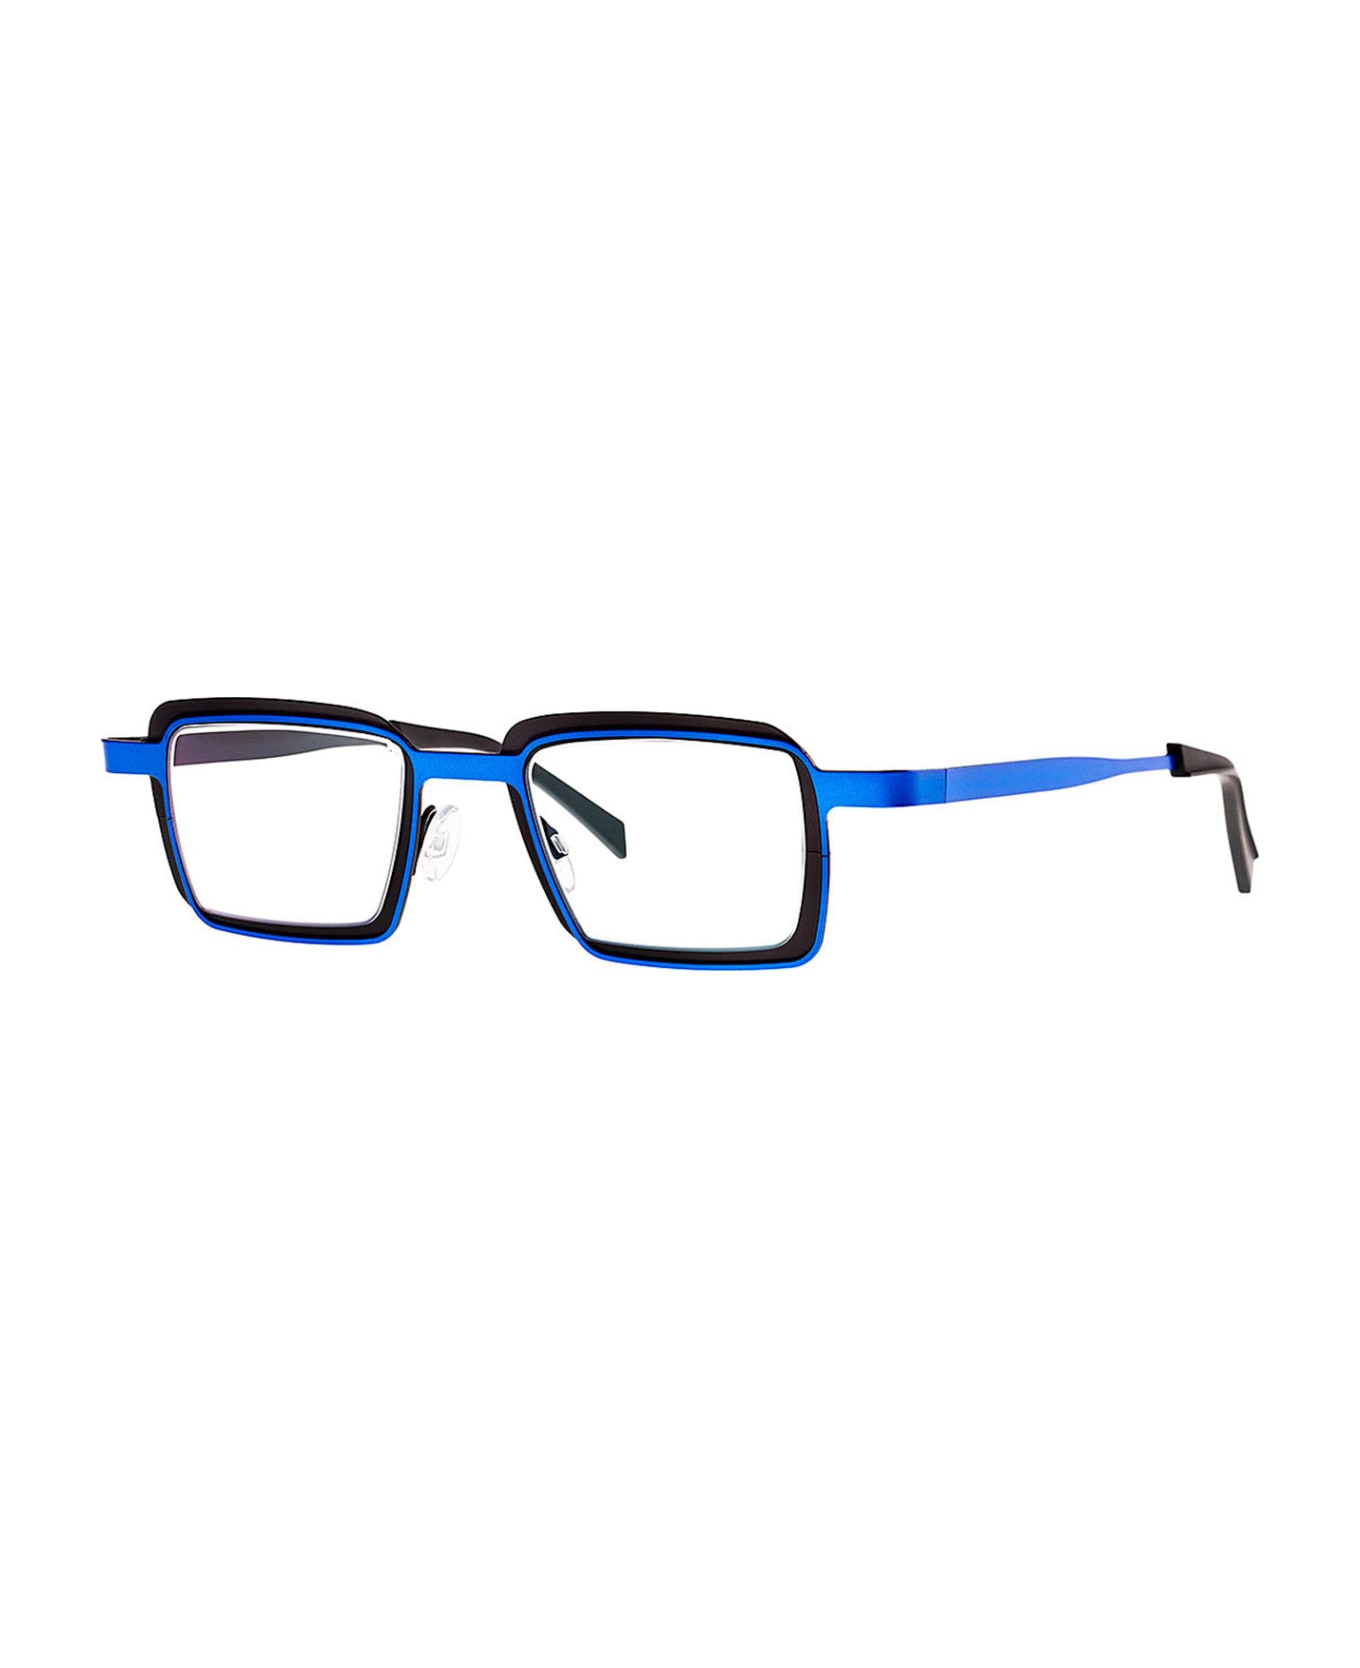 Theo Eyewear Eye Witness Yc 365 Glasses - Black/Blue